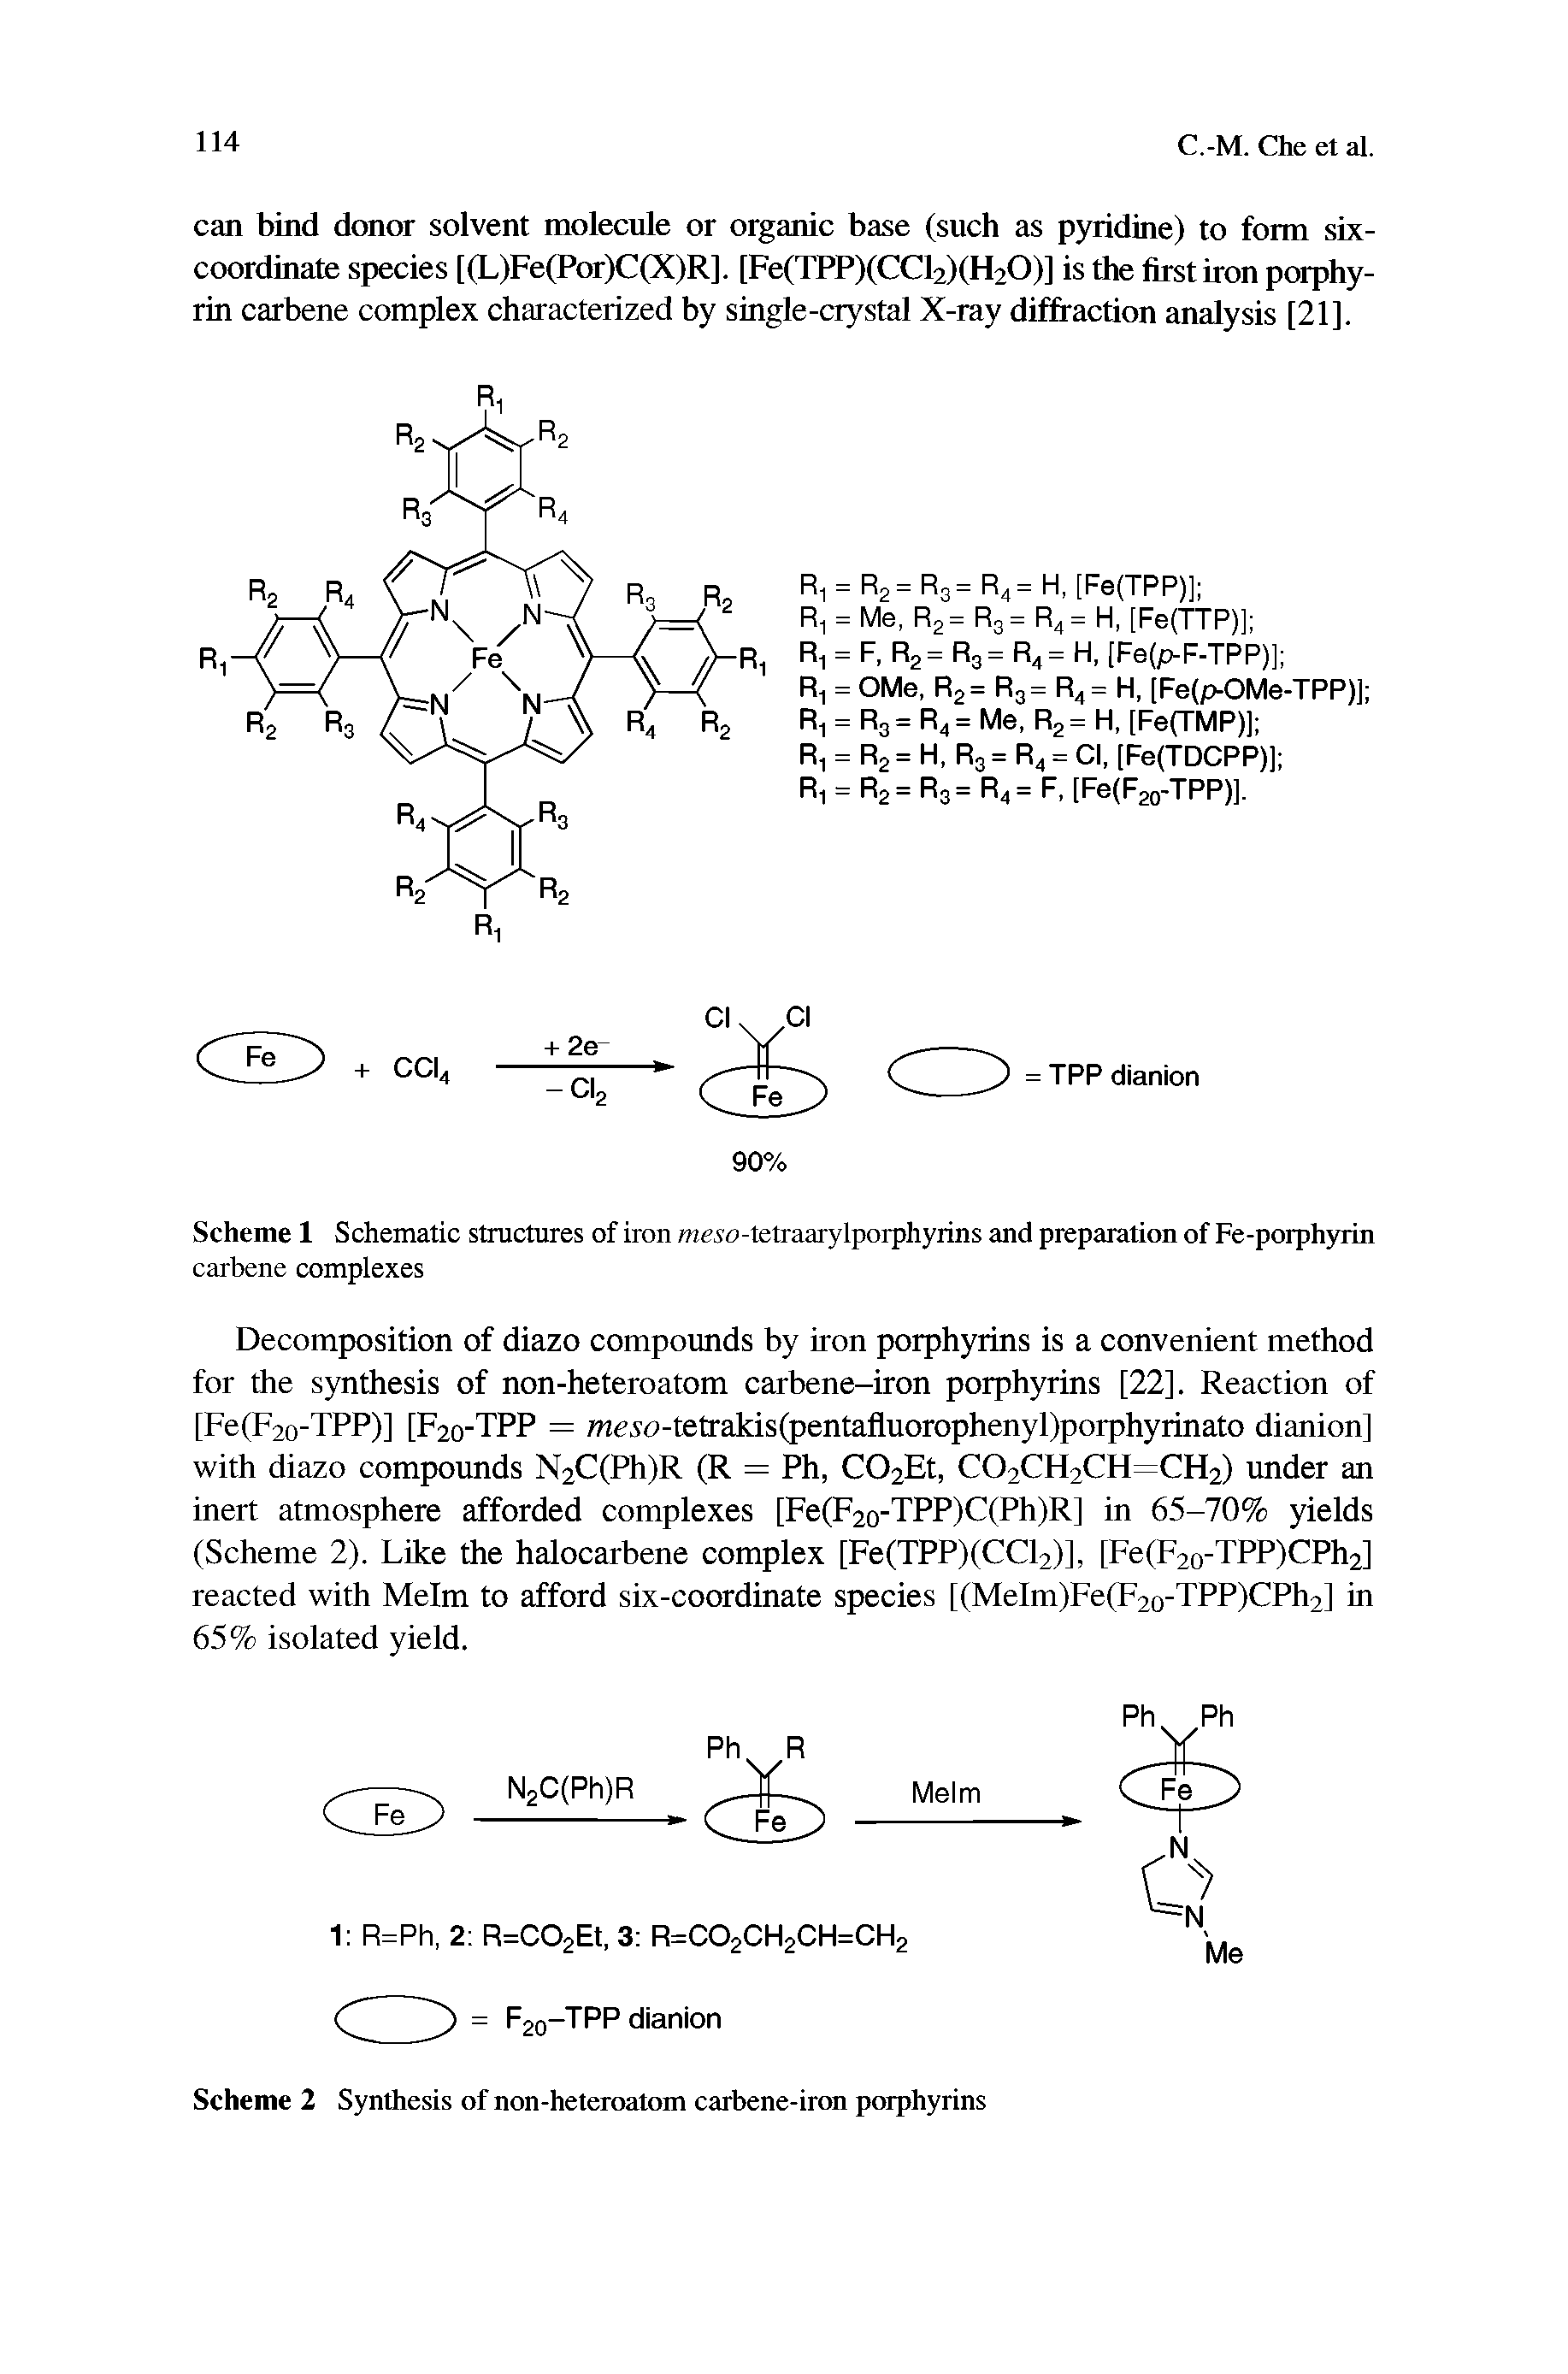 Scheme 2 Synthesis of non-heteroatom carbene-iron porphyrins...